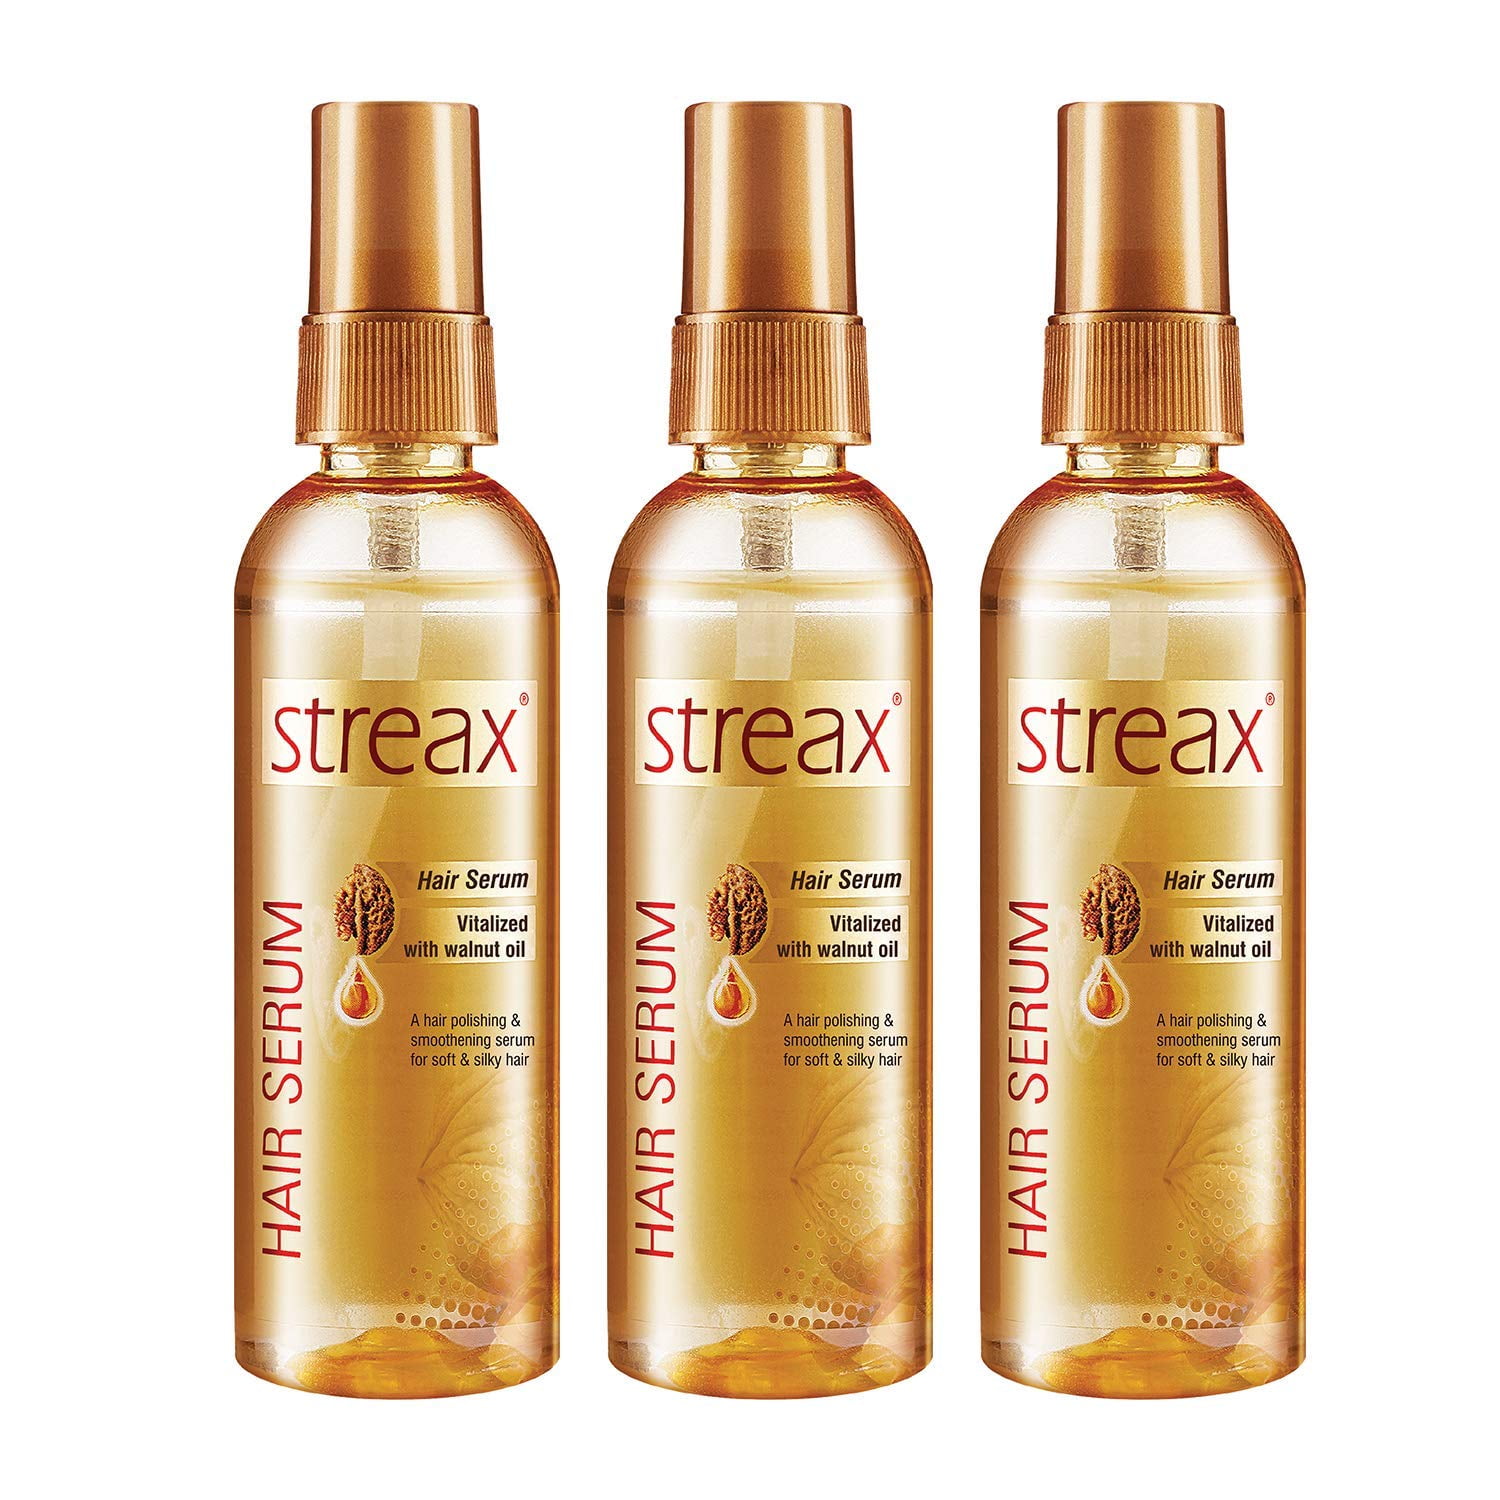 Streax Hair Serum with Walnut Oil (45 ml) Pack of 3 